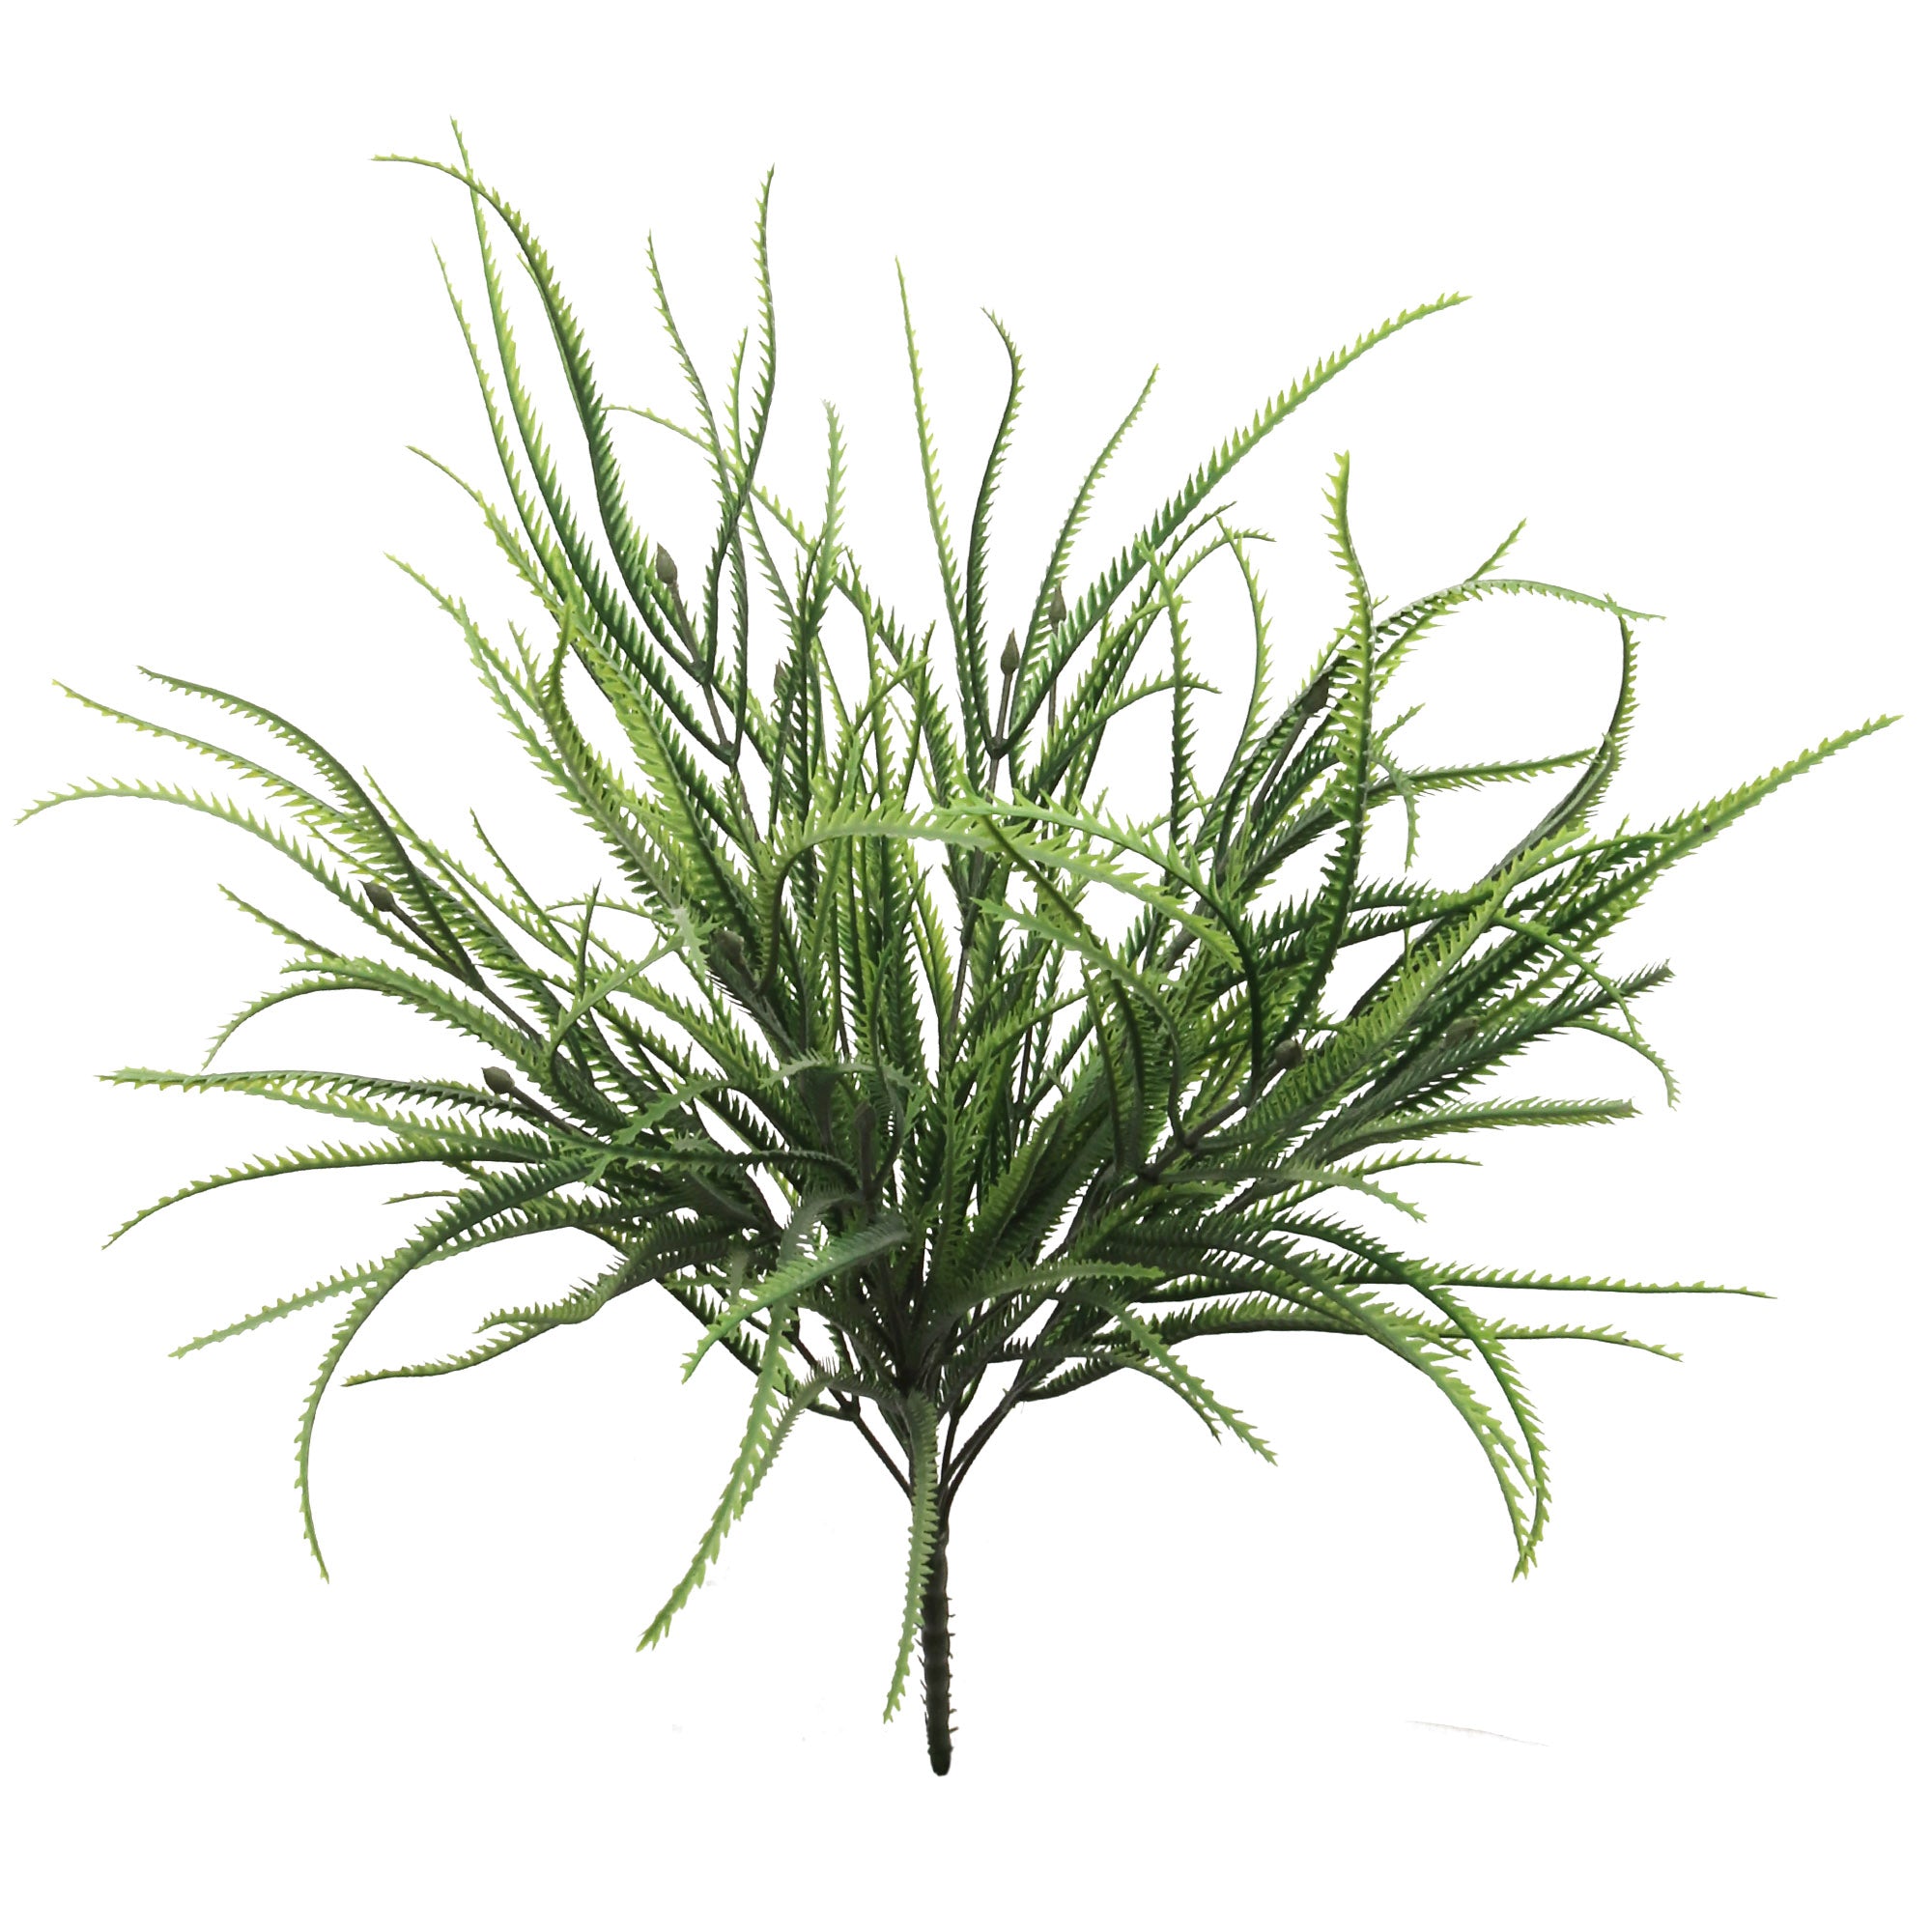 Vibrant 21" Green Artificial Millet Grass Bush - Faux Greenery for Home Décor, Arrangements & Refreshing Centerpieces